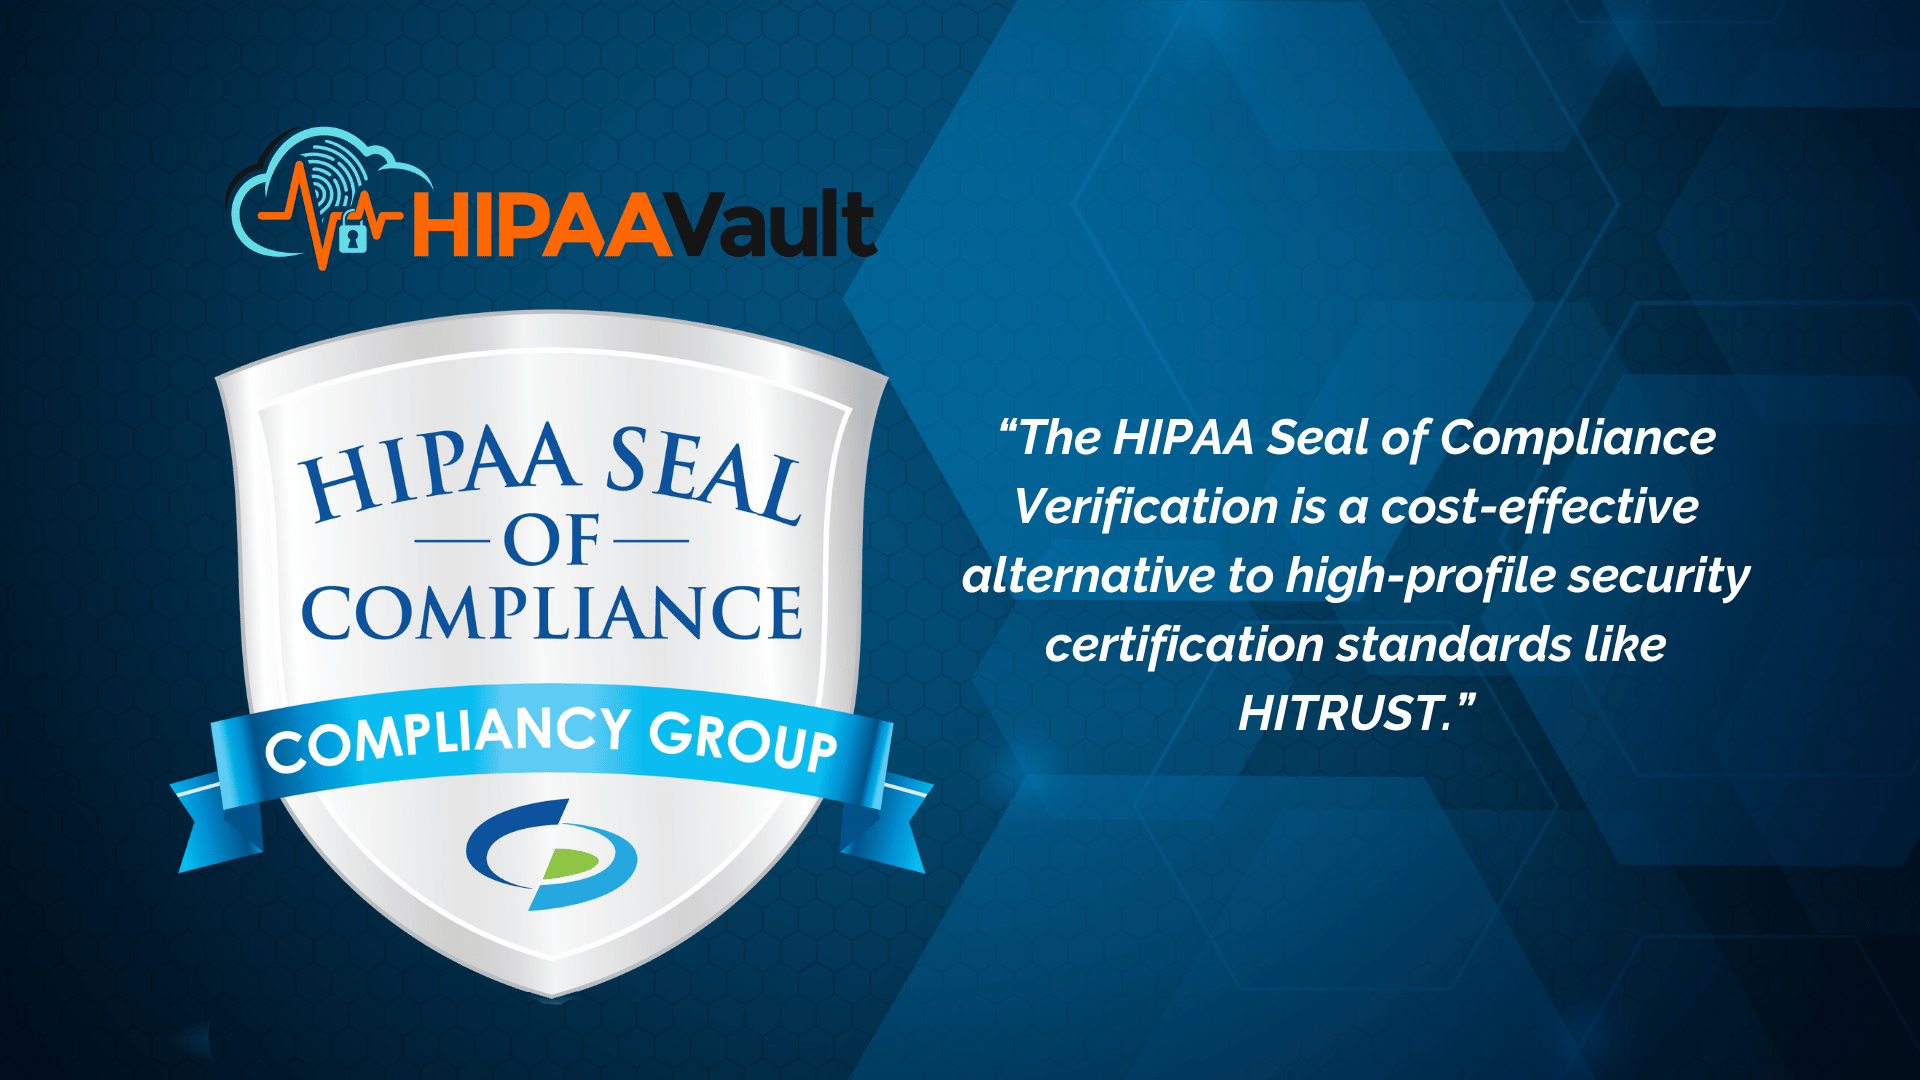 HIPAA Vault Debuts HIPAA Seal of Compliance Verification